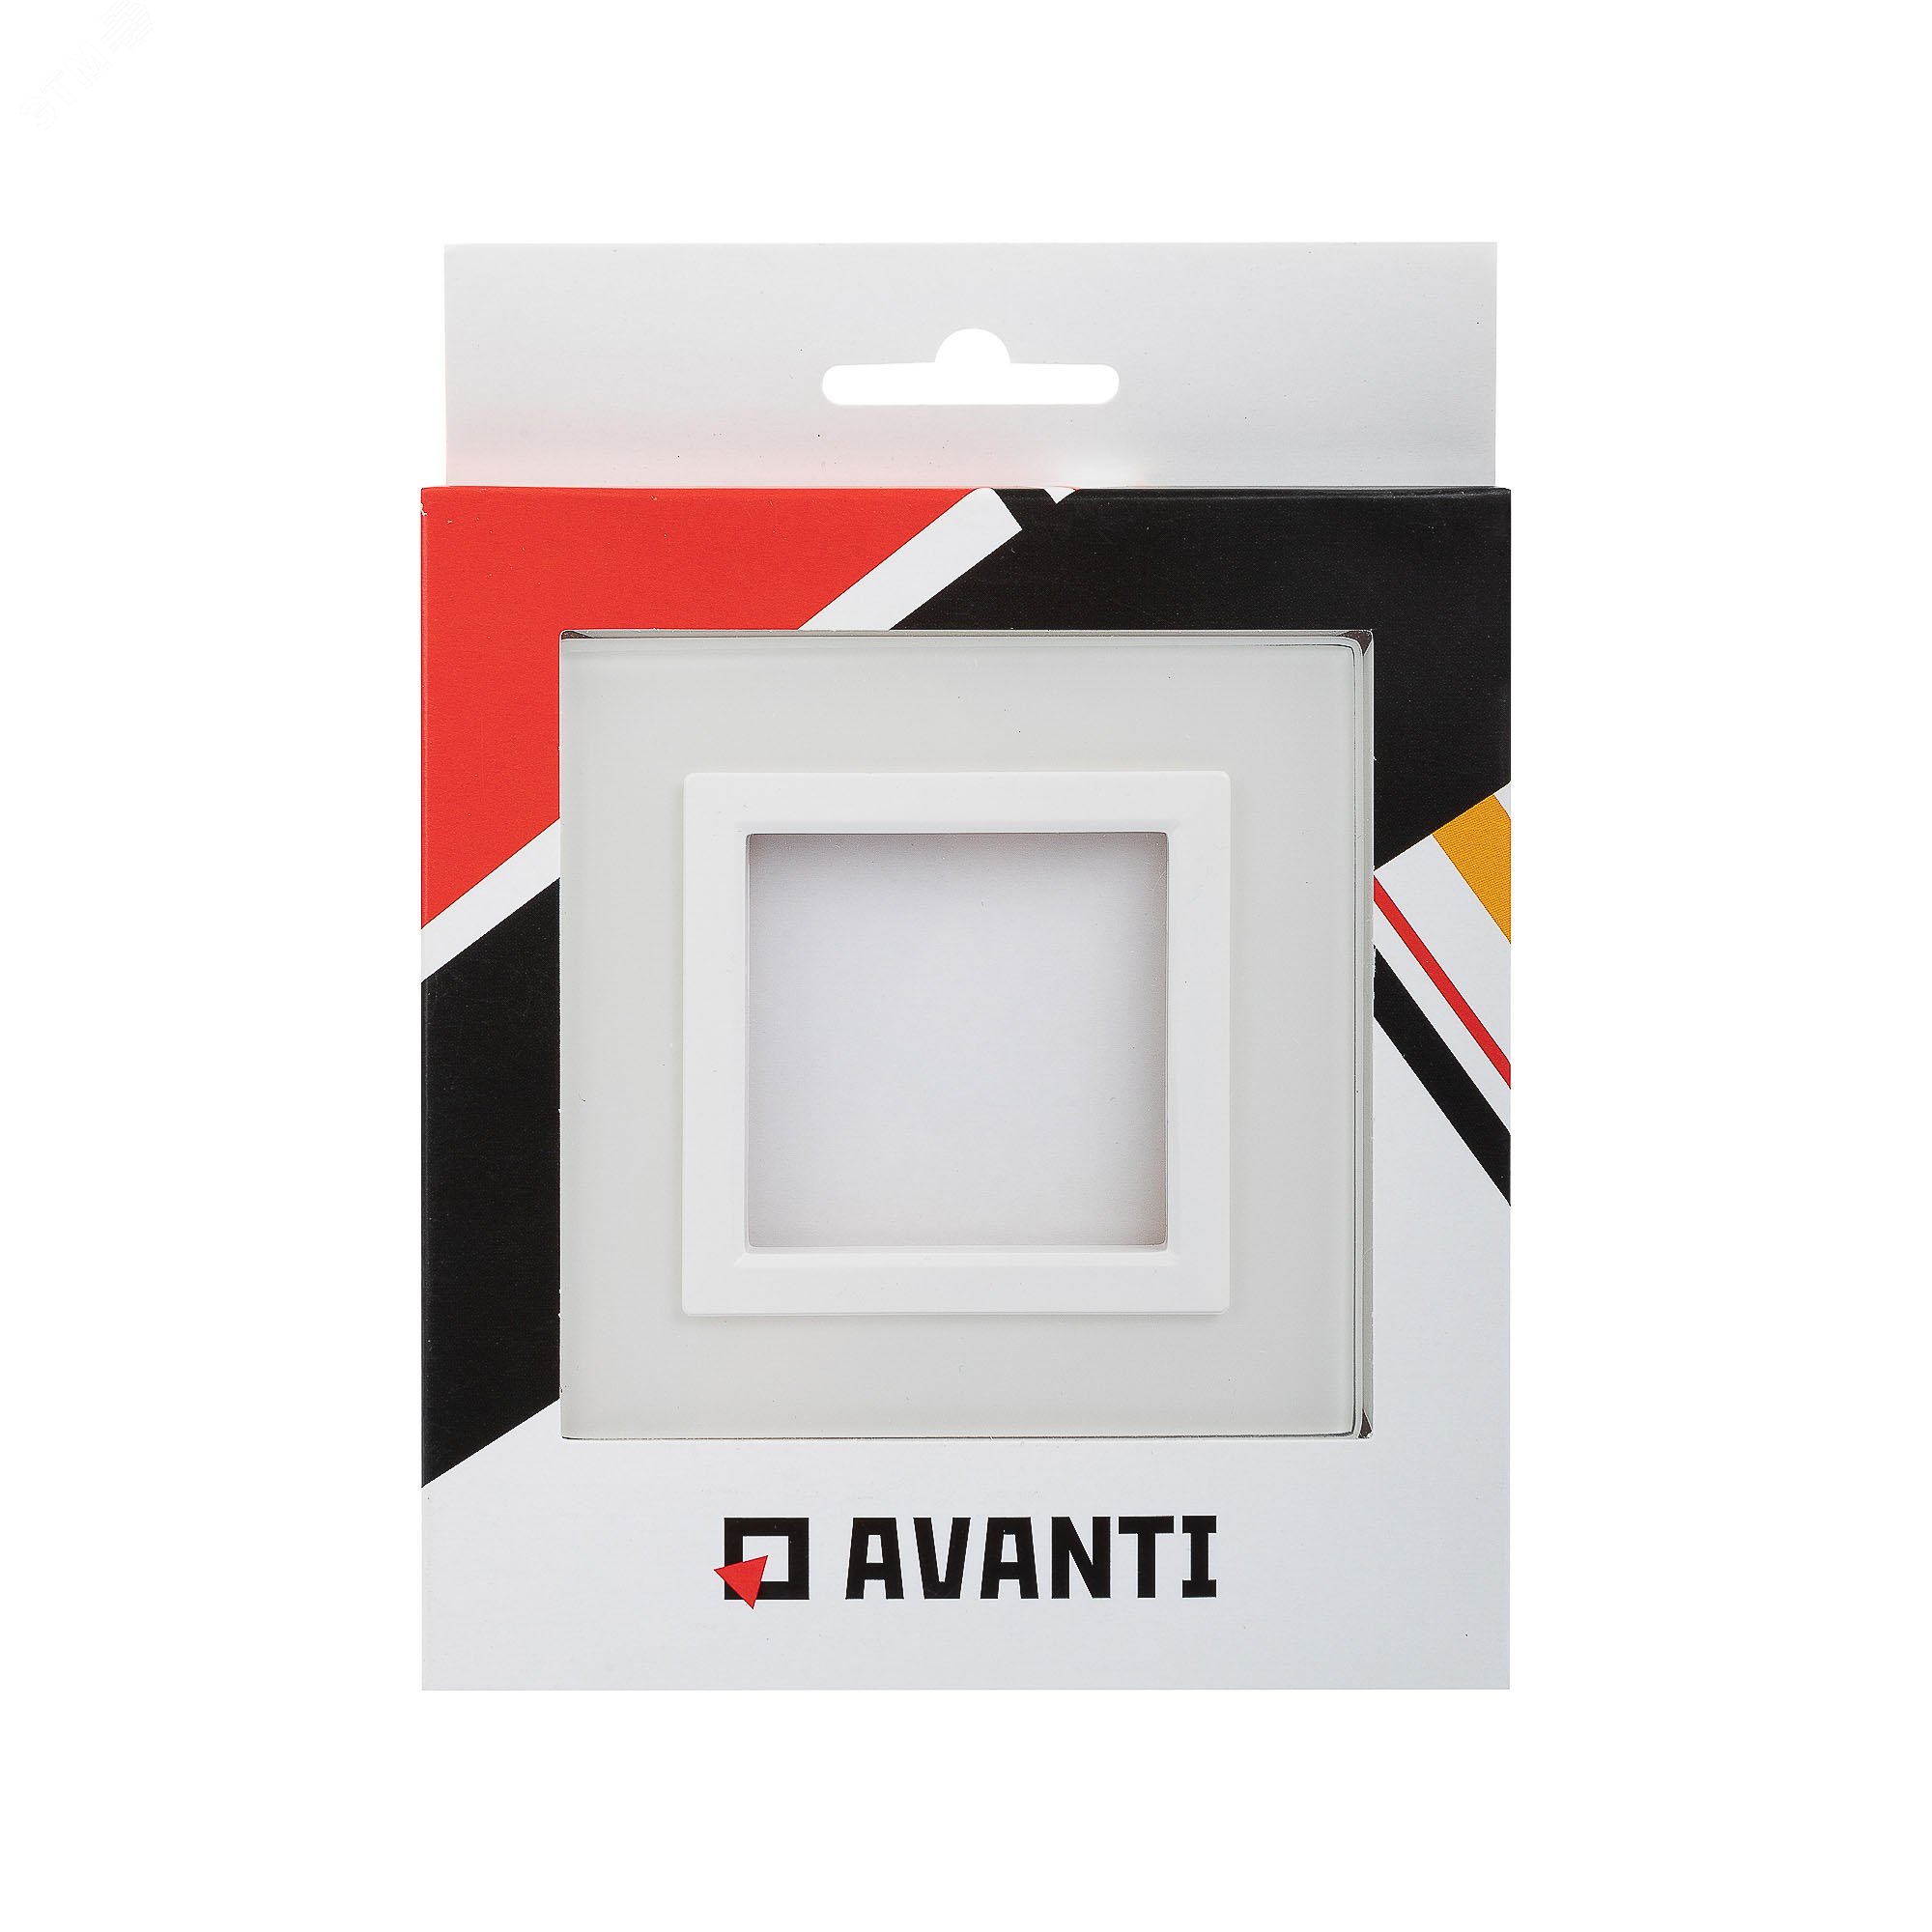 Рамка из натурального стекла,  ''Avanti'', белая, 2 модуля 4400822 DKC - превью 6